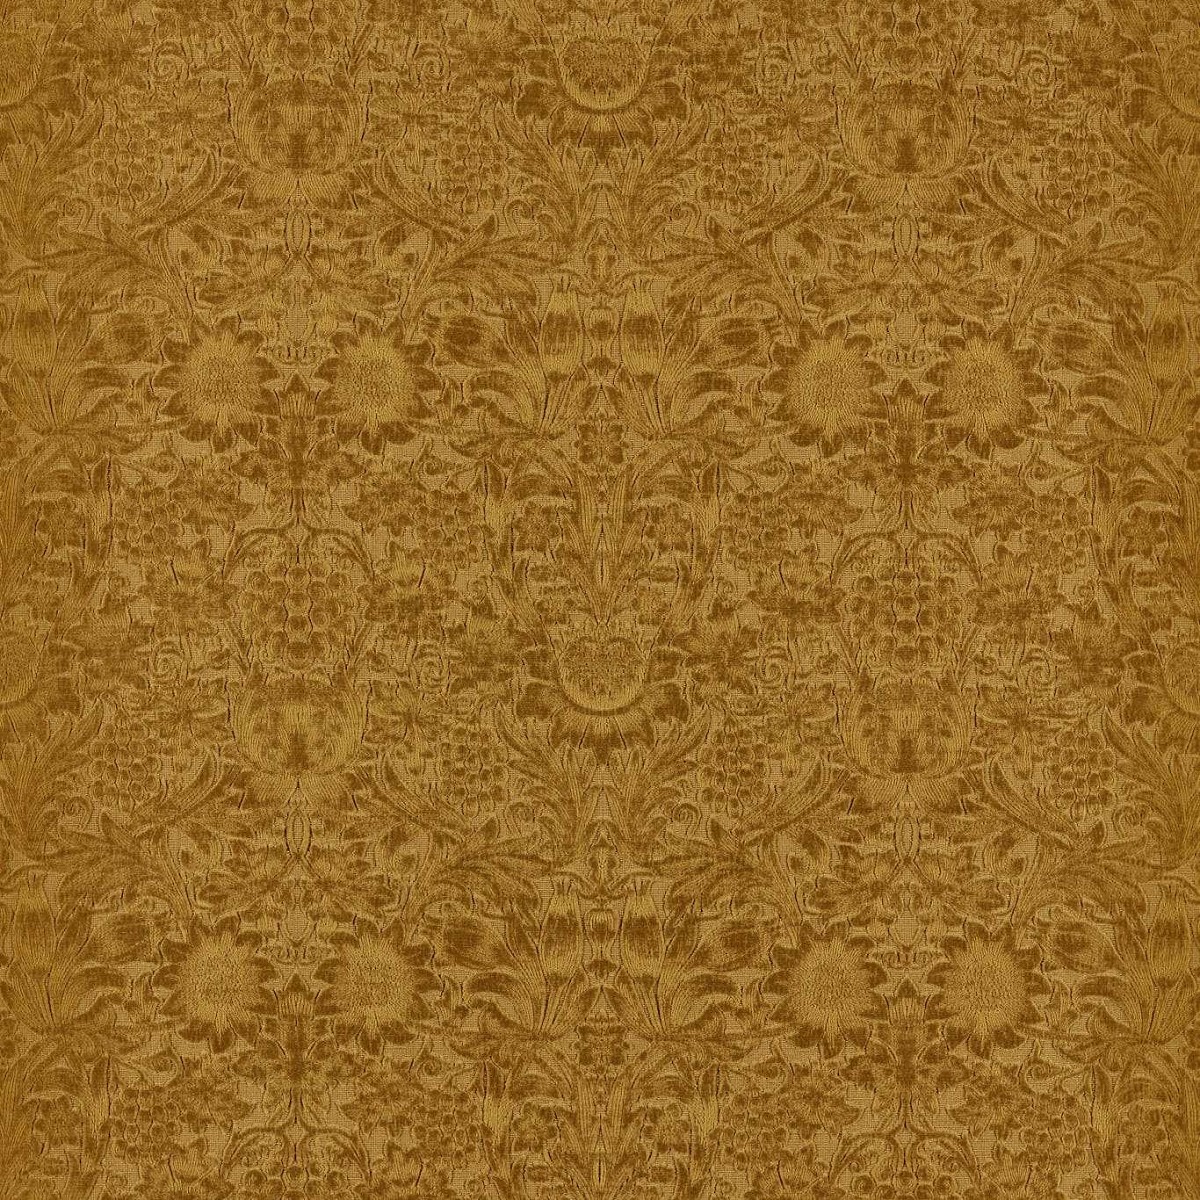 Sunflower Caffoy Velvet Sussex Rush Fabric by William Morris & Co.